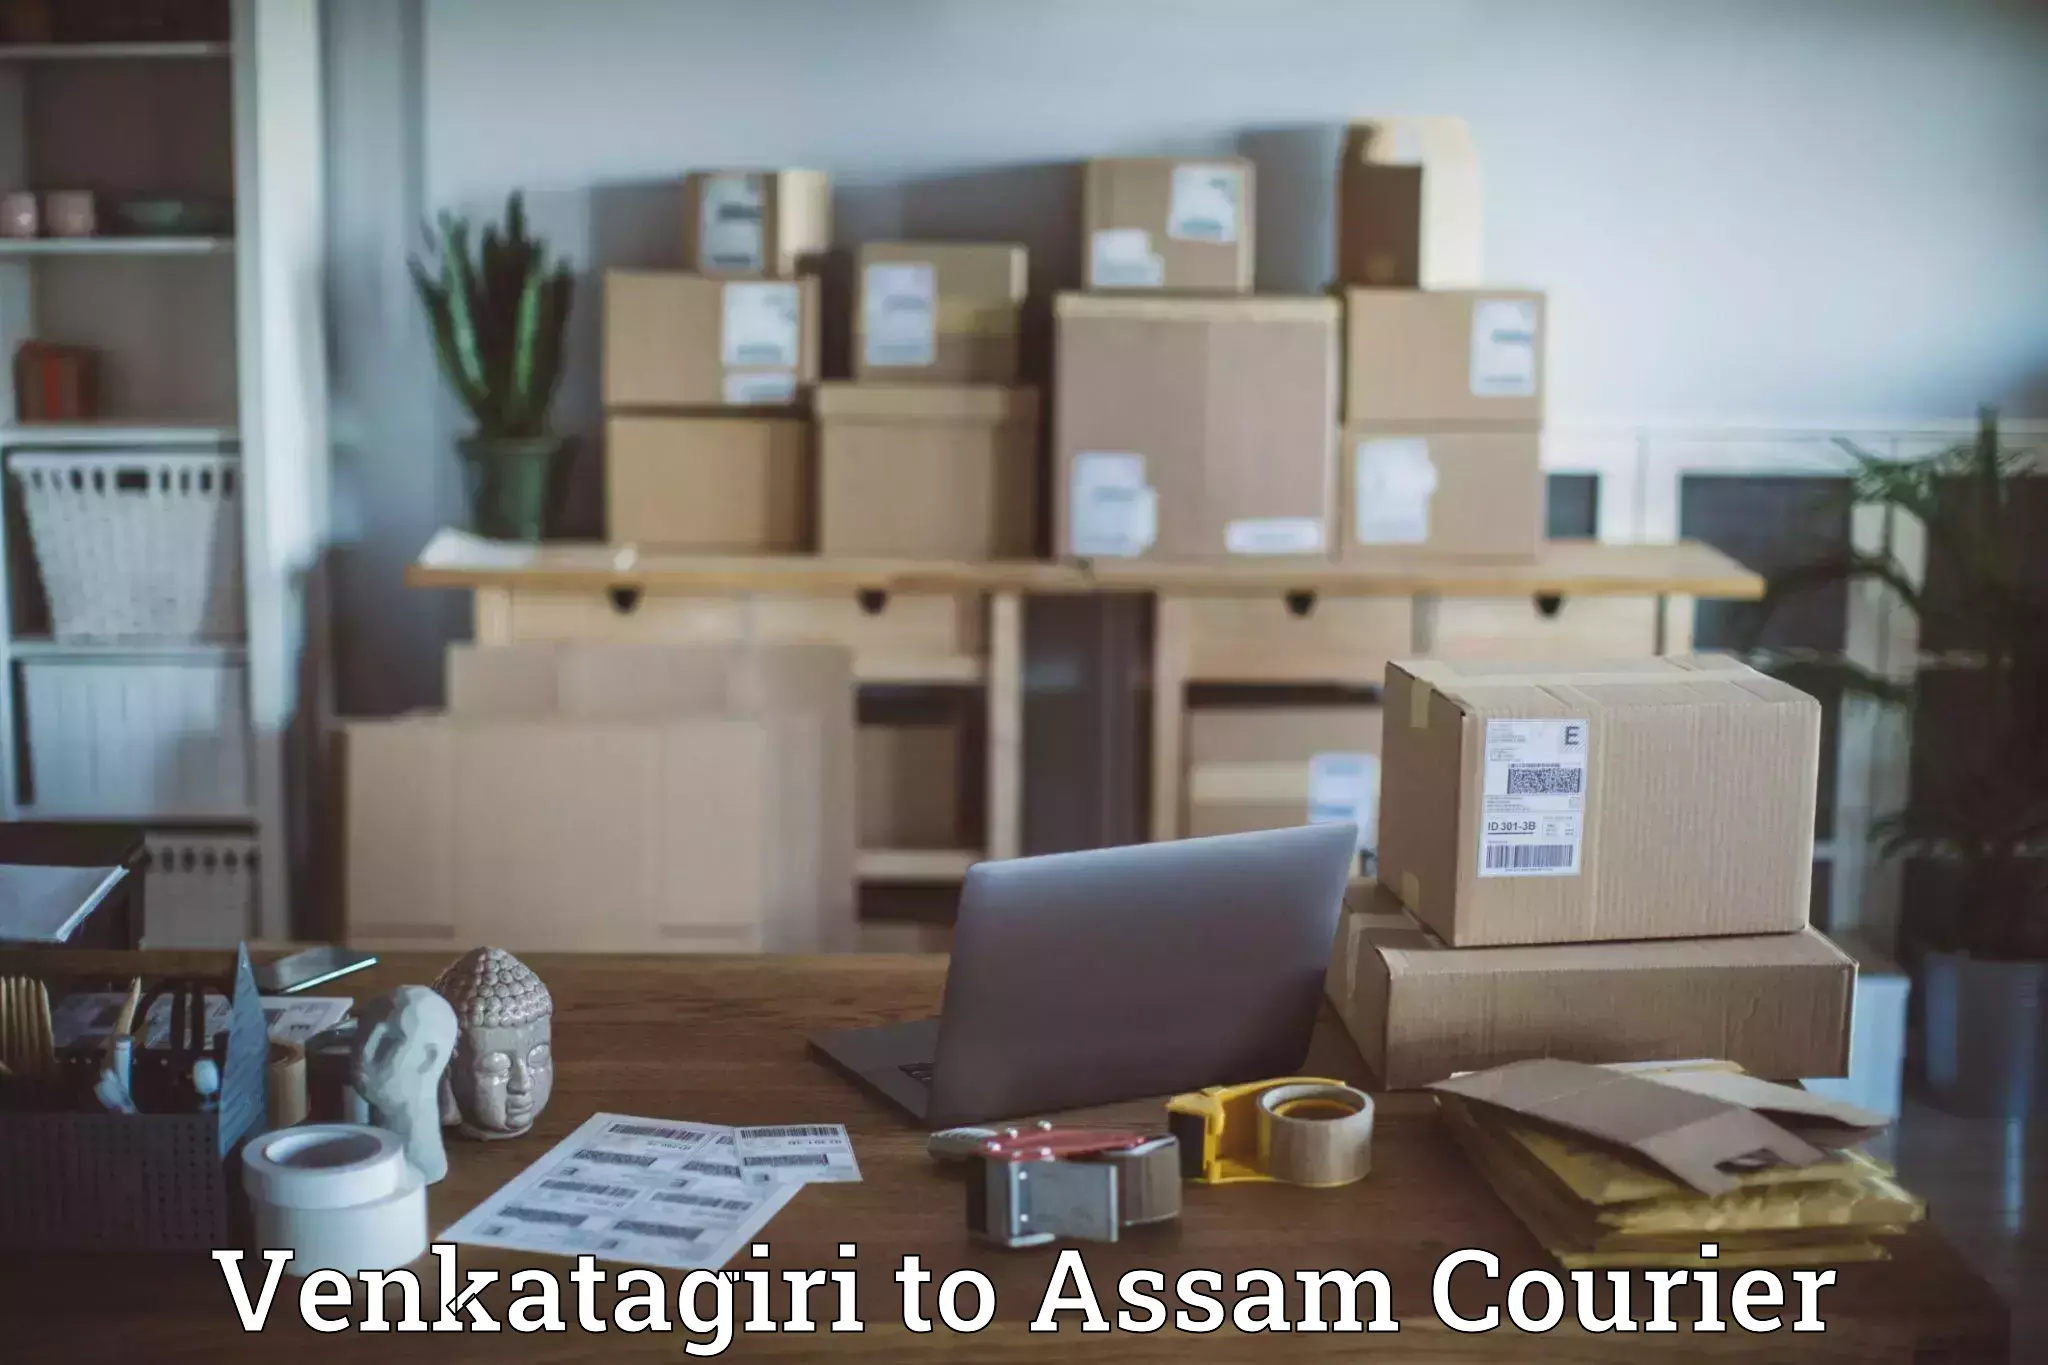 Cash on delivery service Venkatagiri to Assam